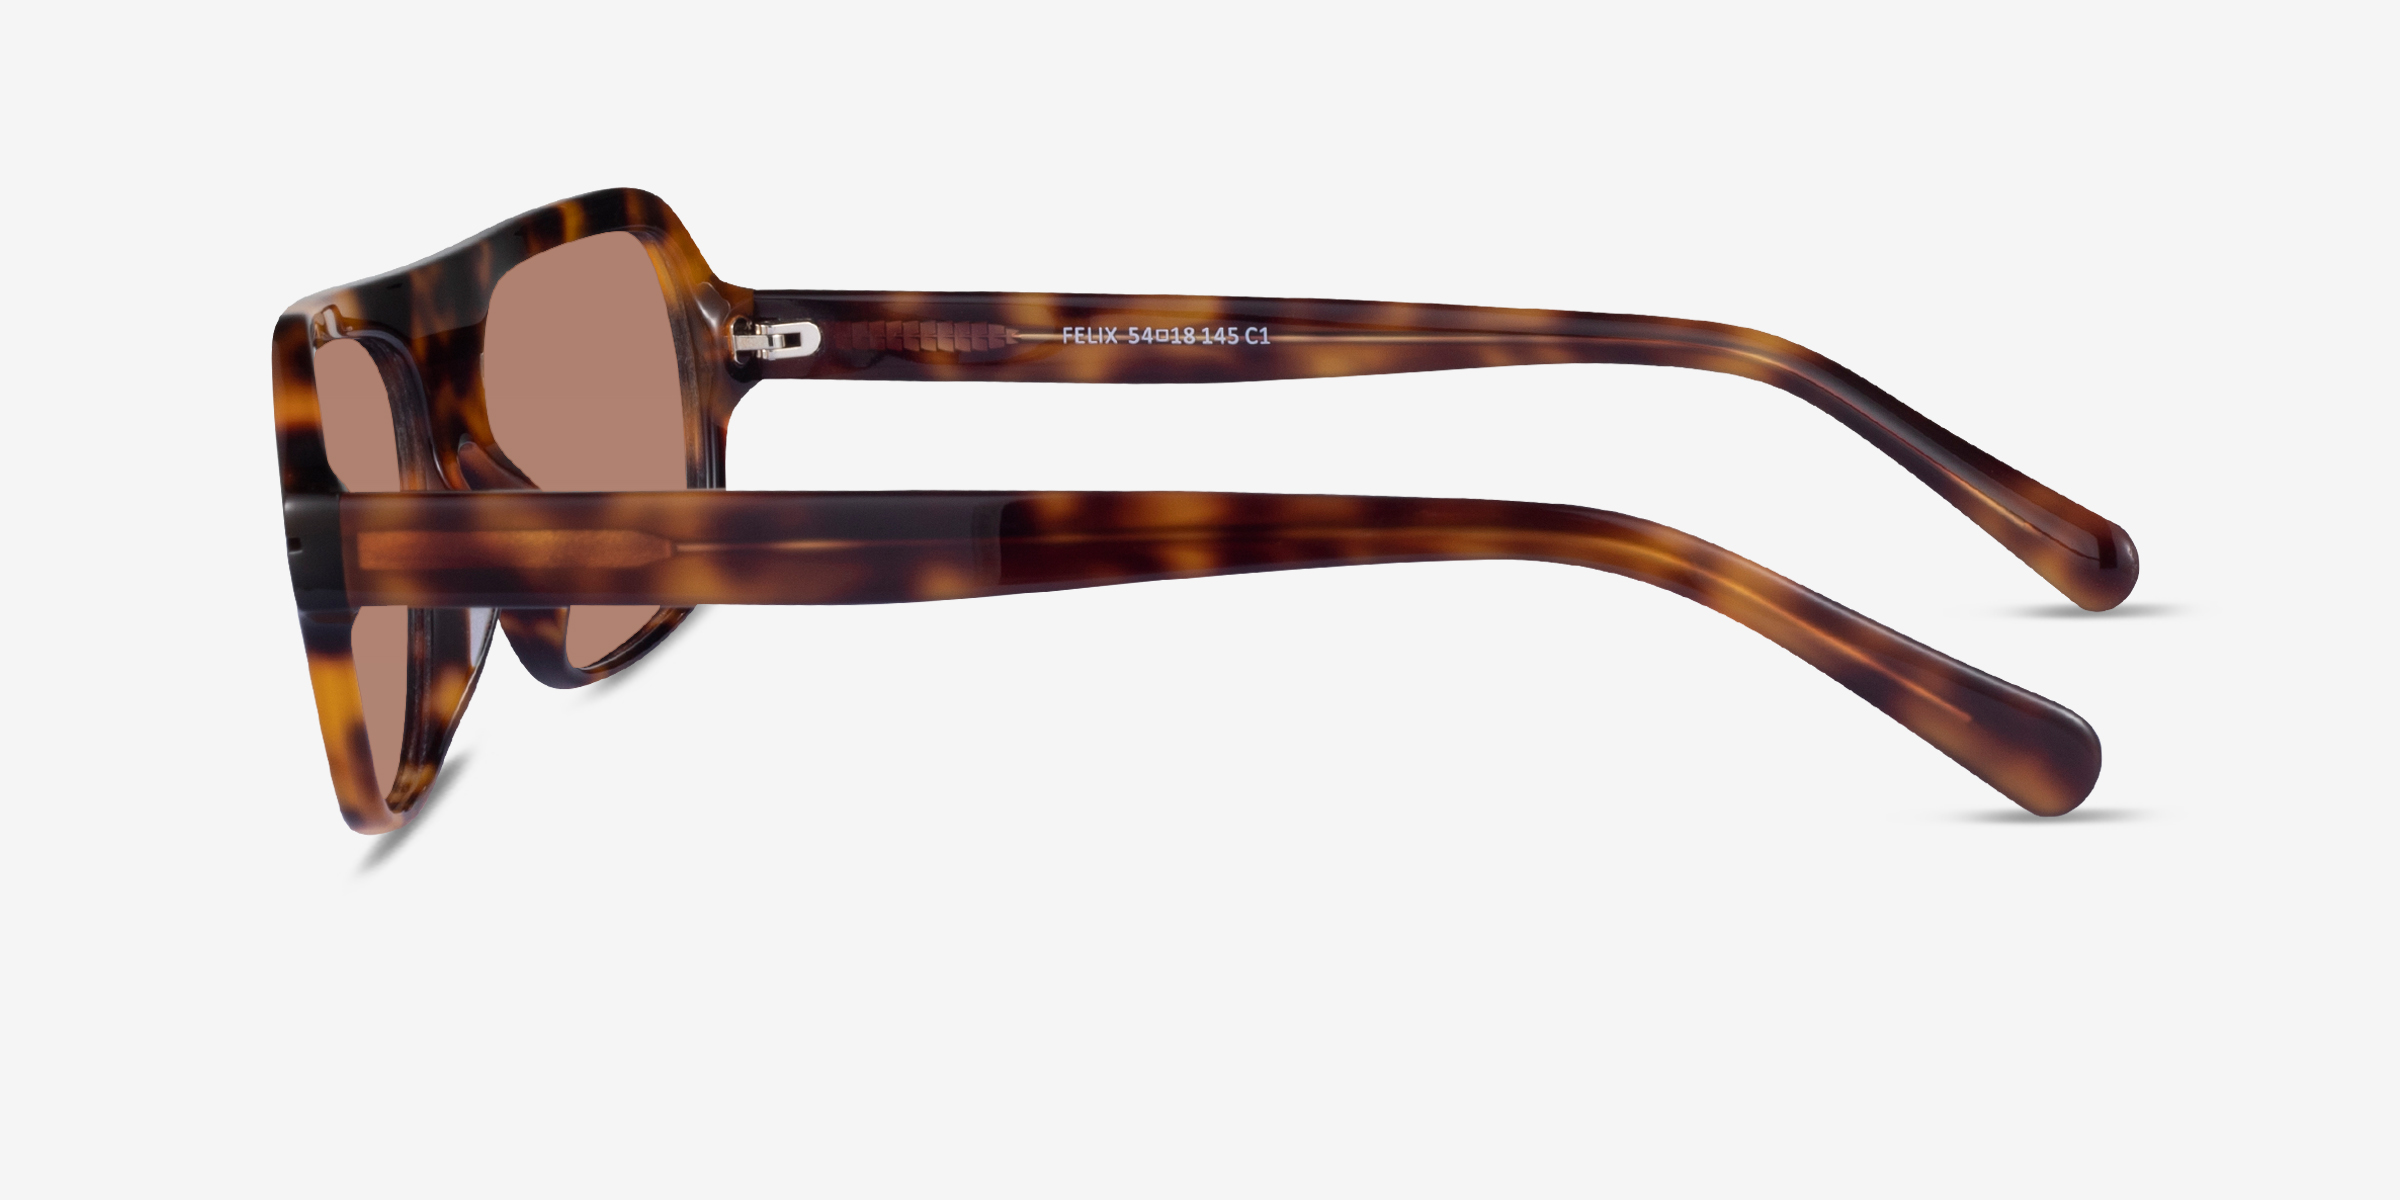 Felix Aviator Tortoise Frame Prescription Sunglasses Eyebuydirect